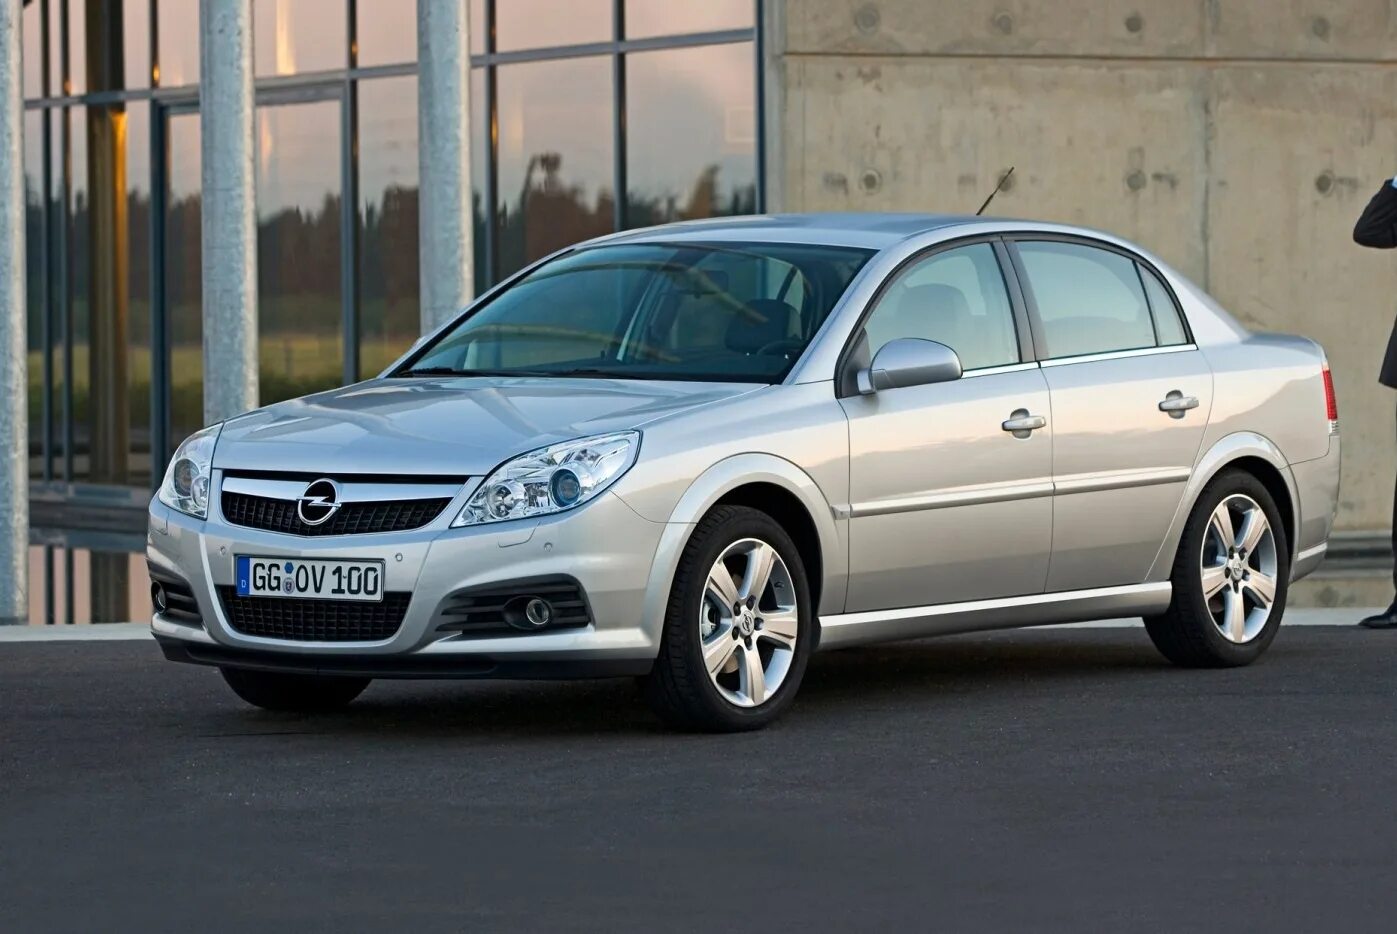 Opel Vectra седан 2008. Opel Vectra c 2002. Opel Vectra 1.8. Opel Vectra c седан.